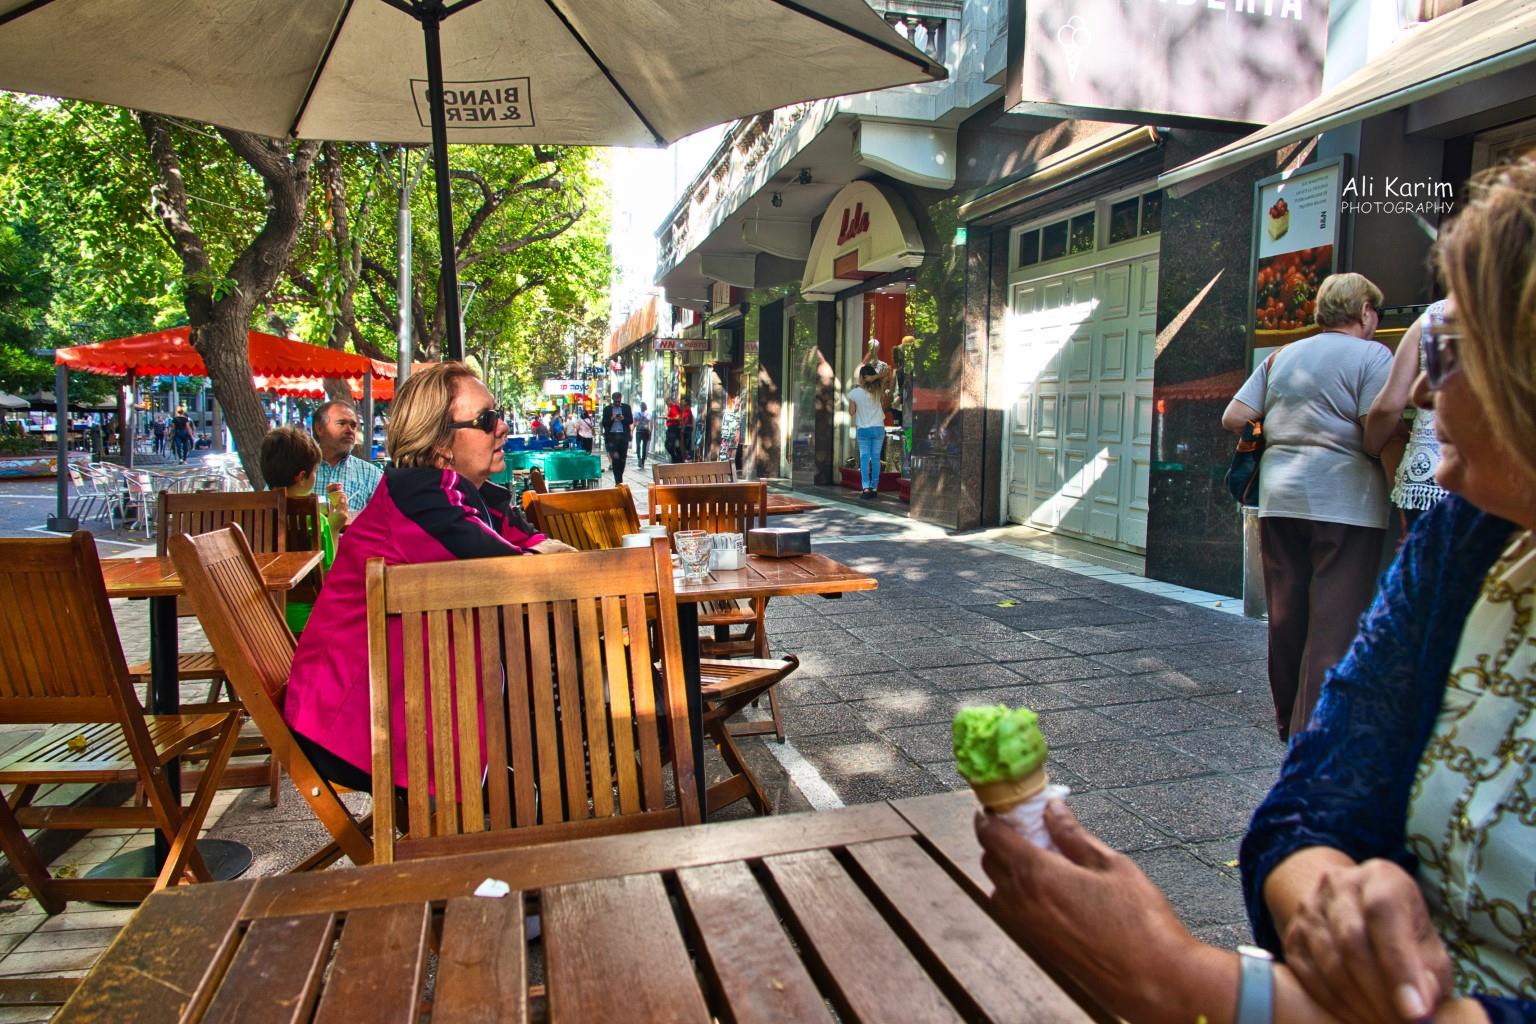 Mendoza, Argentina Nice outdoor tree shaded pedestrian street with outdoor cafés